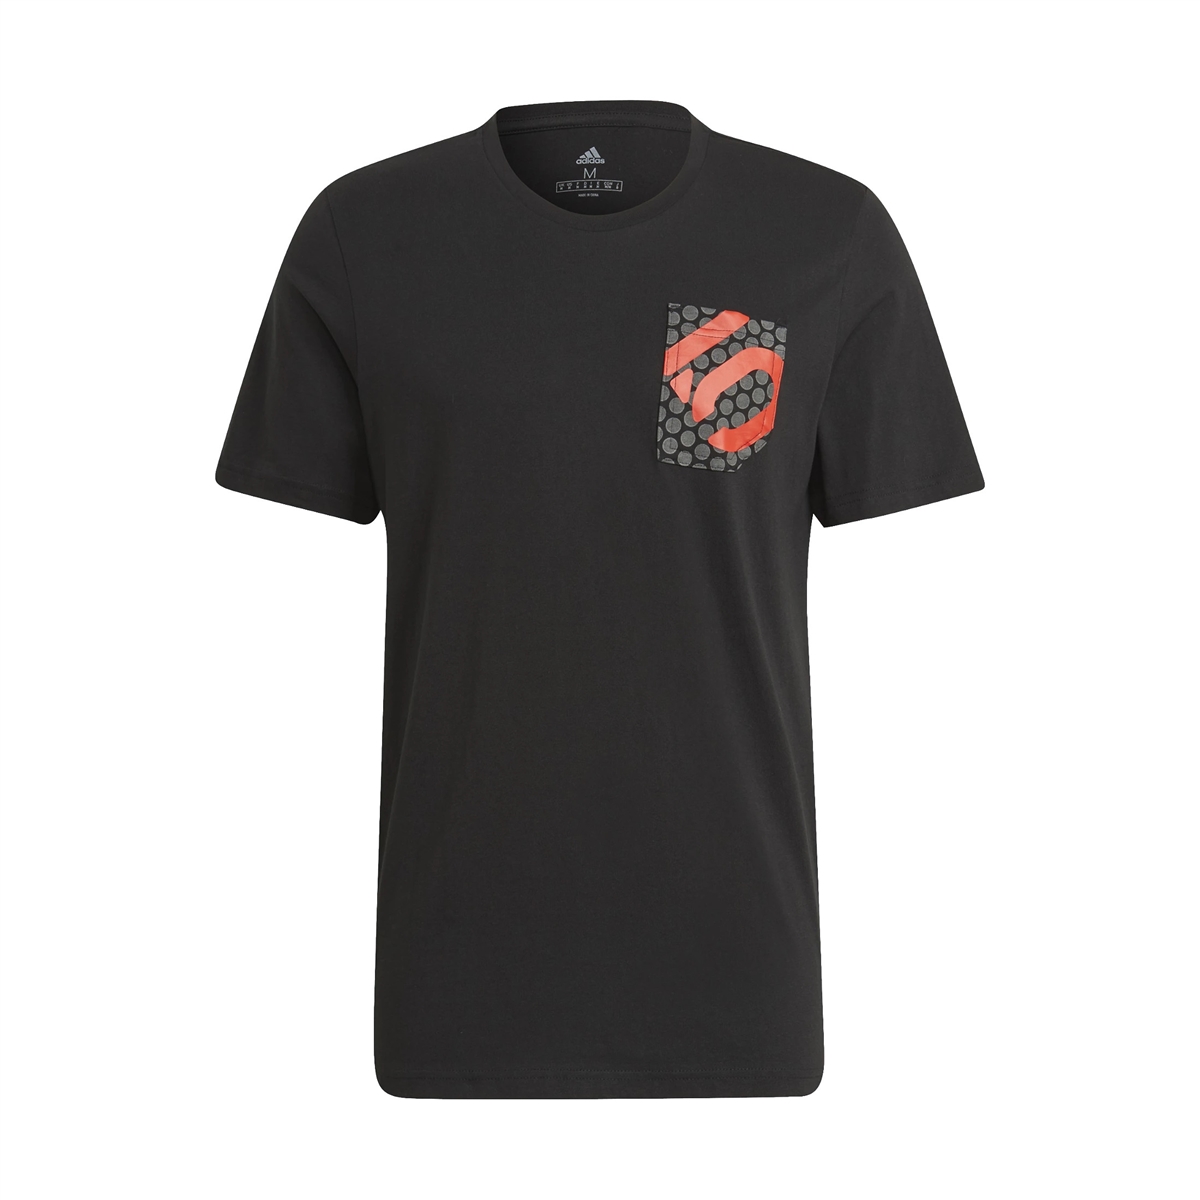 5.10 BOTB Brand of The Brave Camiseta Negra 2021 Talla M